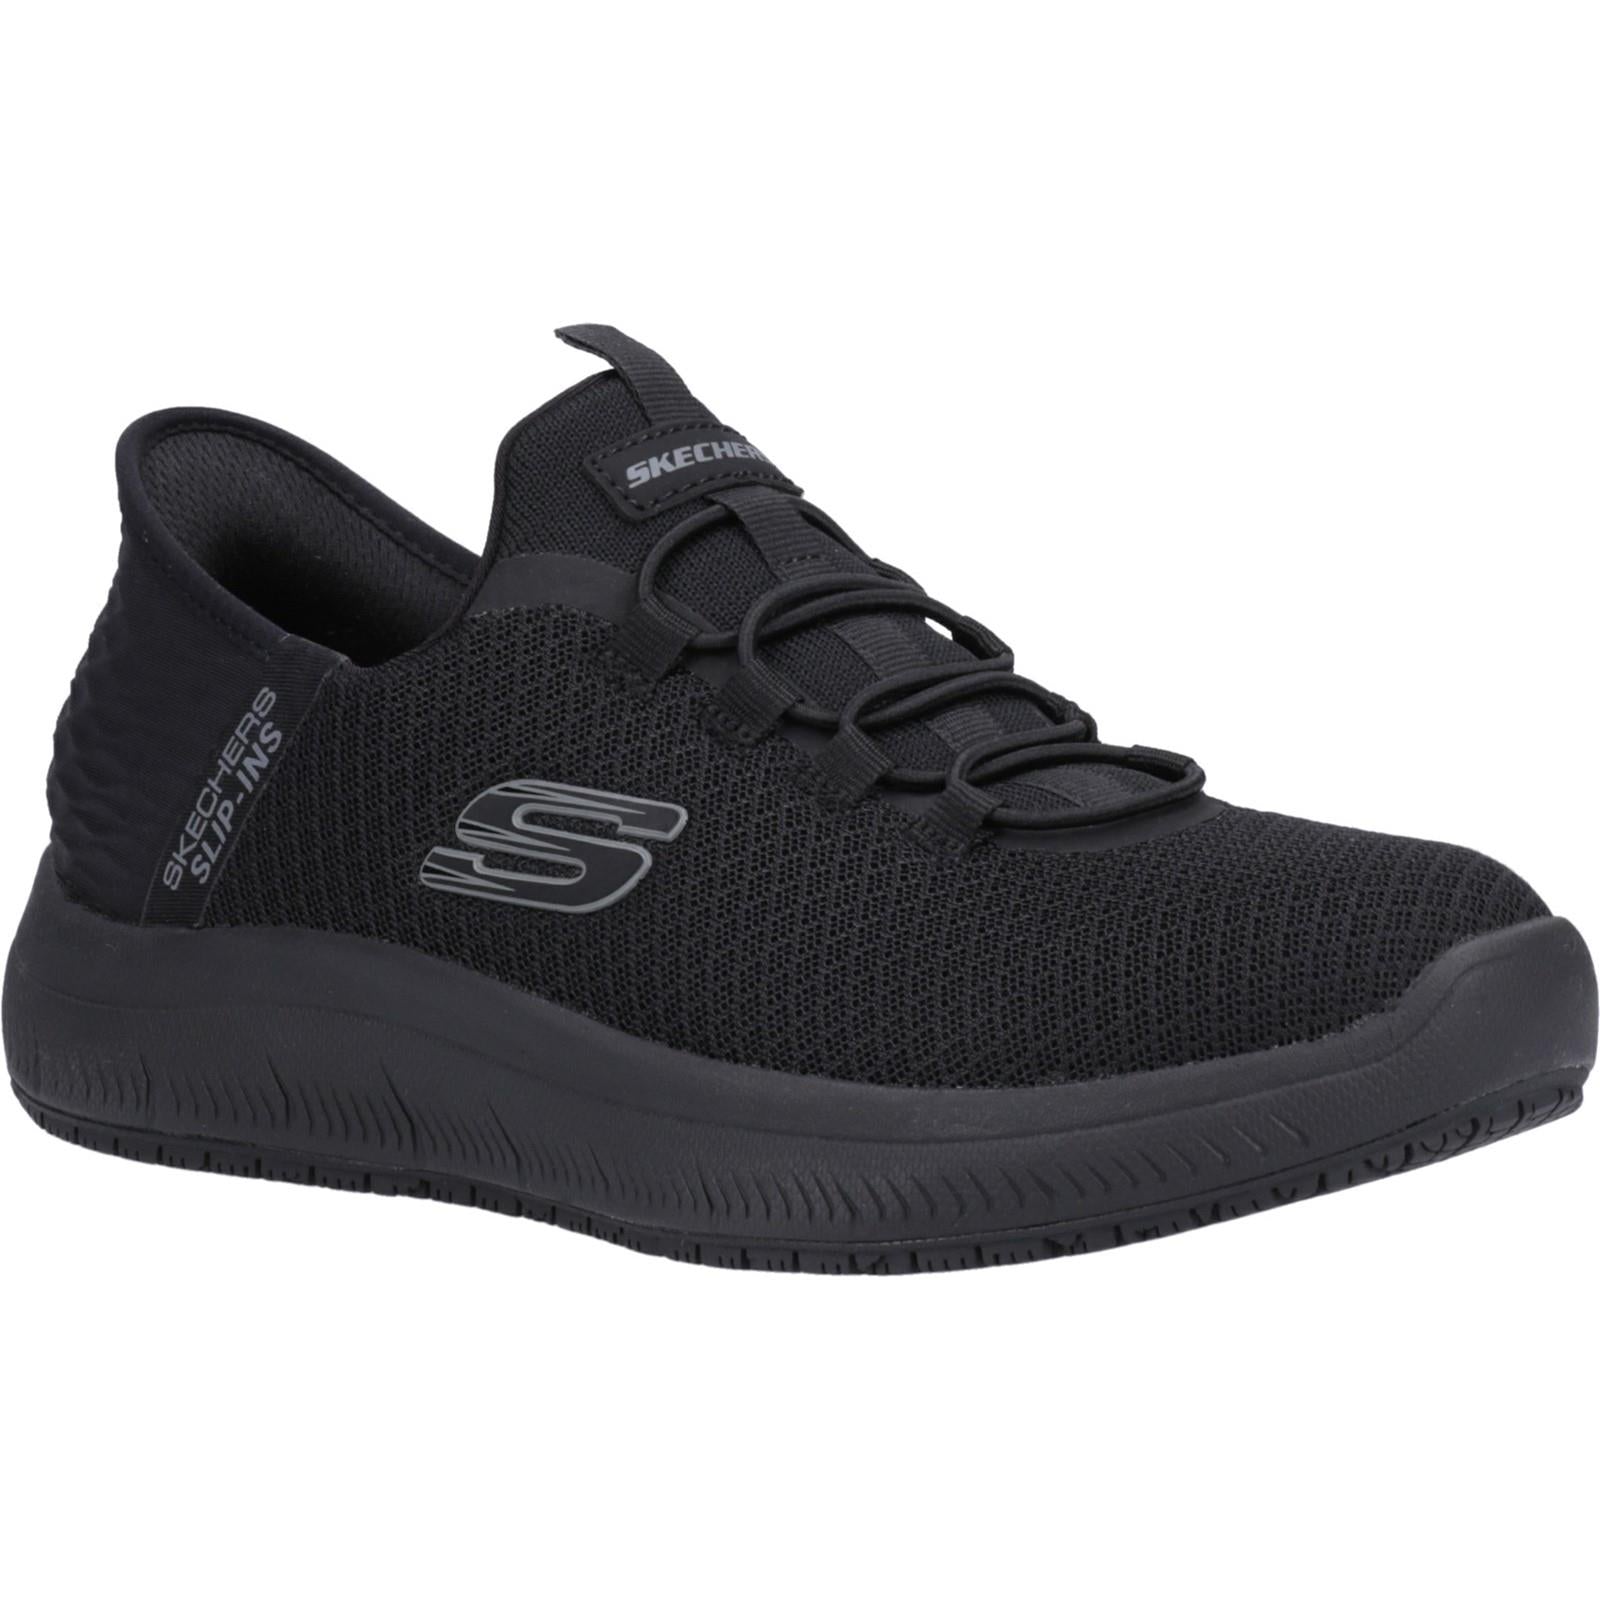 Skechers Summits Colsin black memory foam slip in work trainers shoes #200205EC